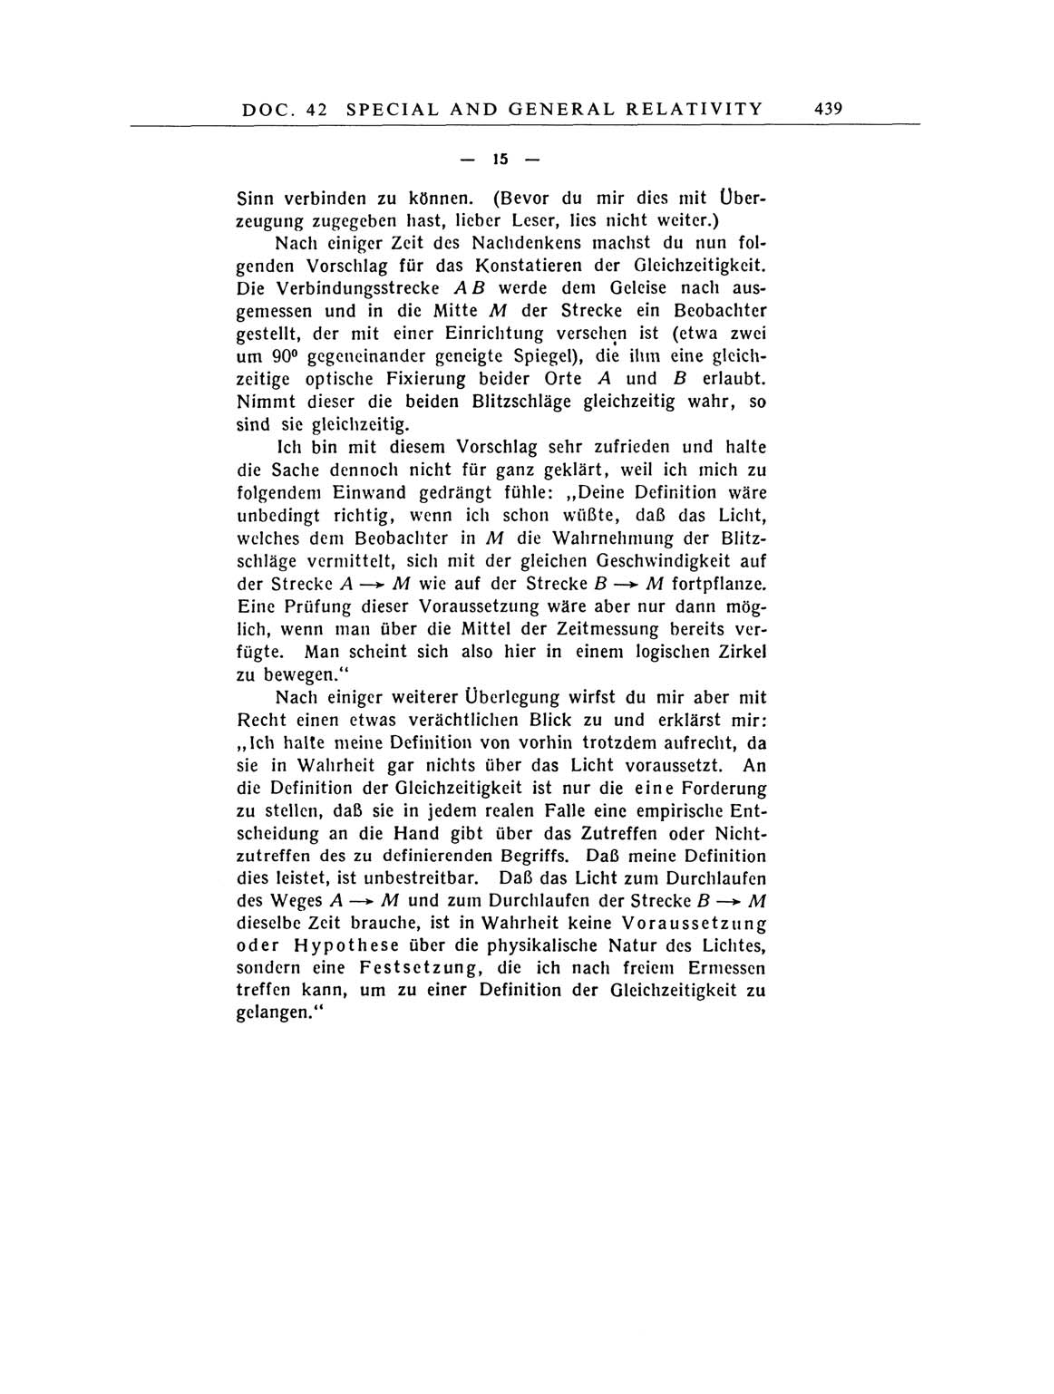 Volume 6: The Berlin Years: Writings, 1914-1917 page 439